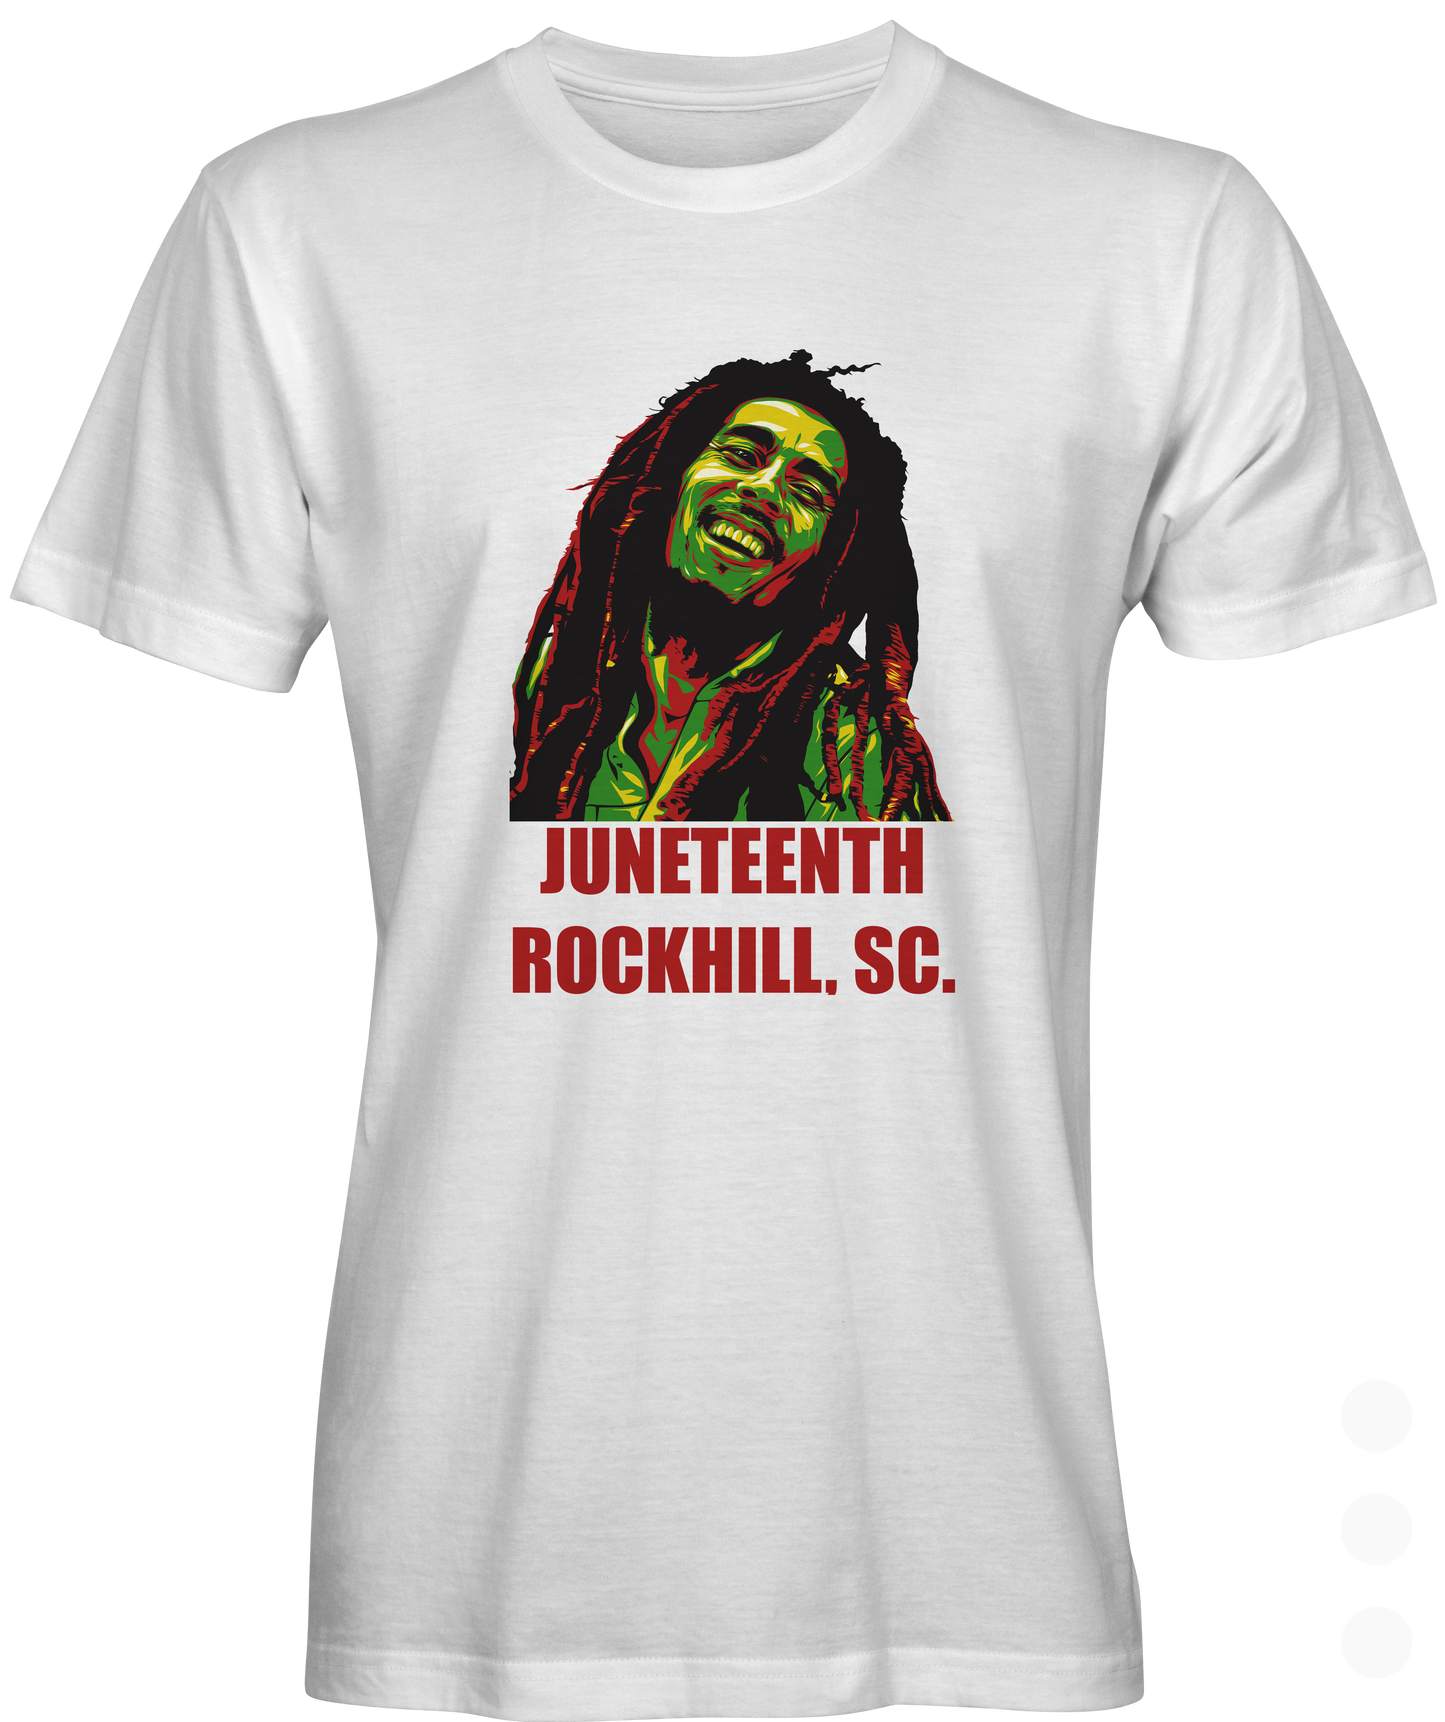 Juneteenth Rockhill SC Bob Marley Graphic Tee